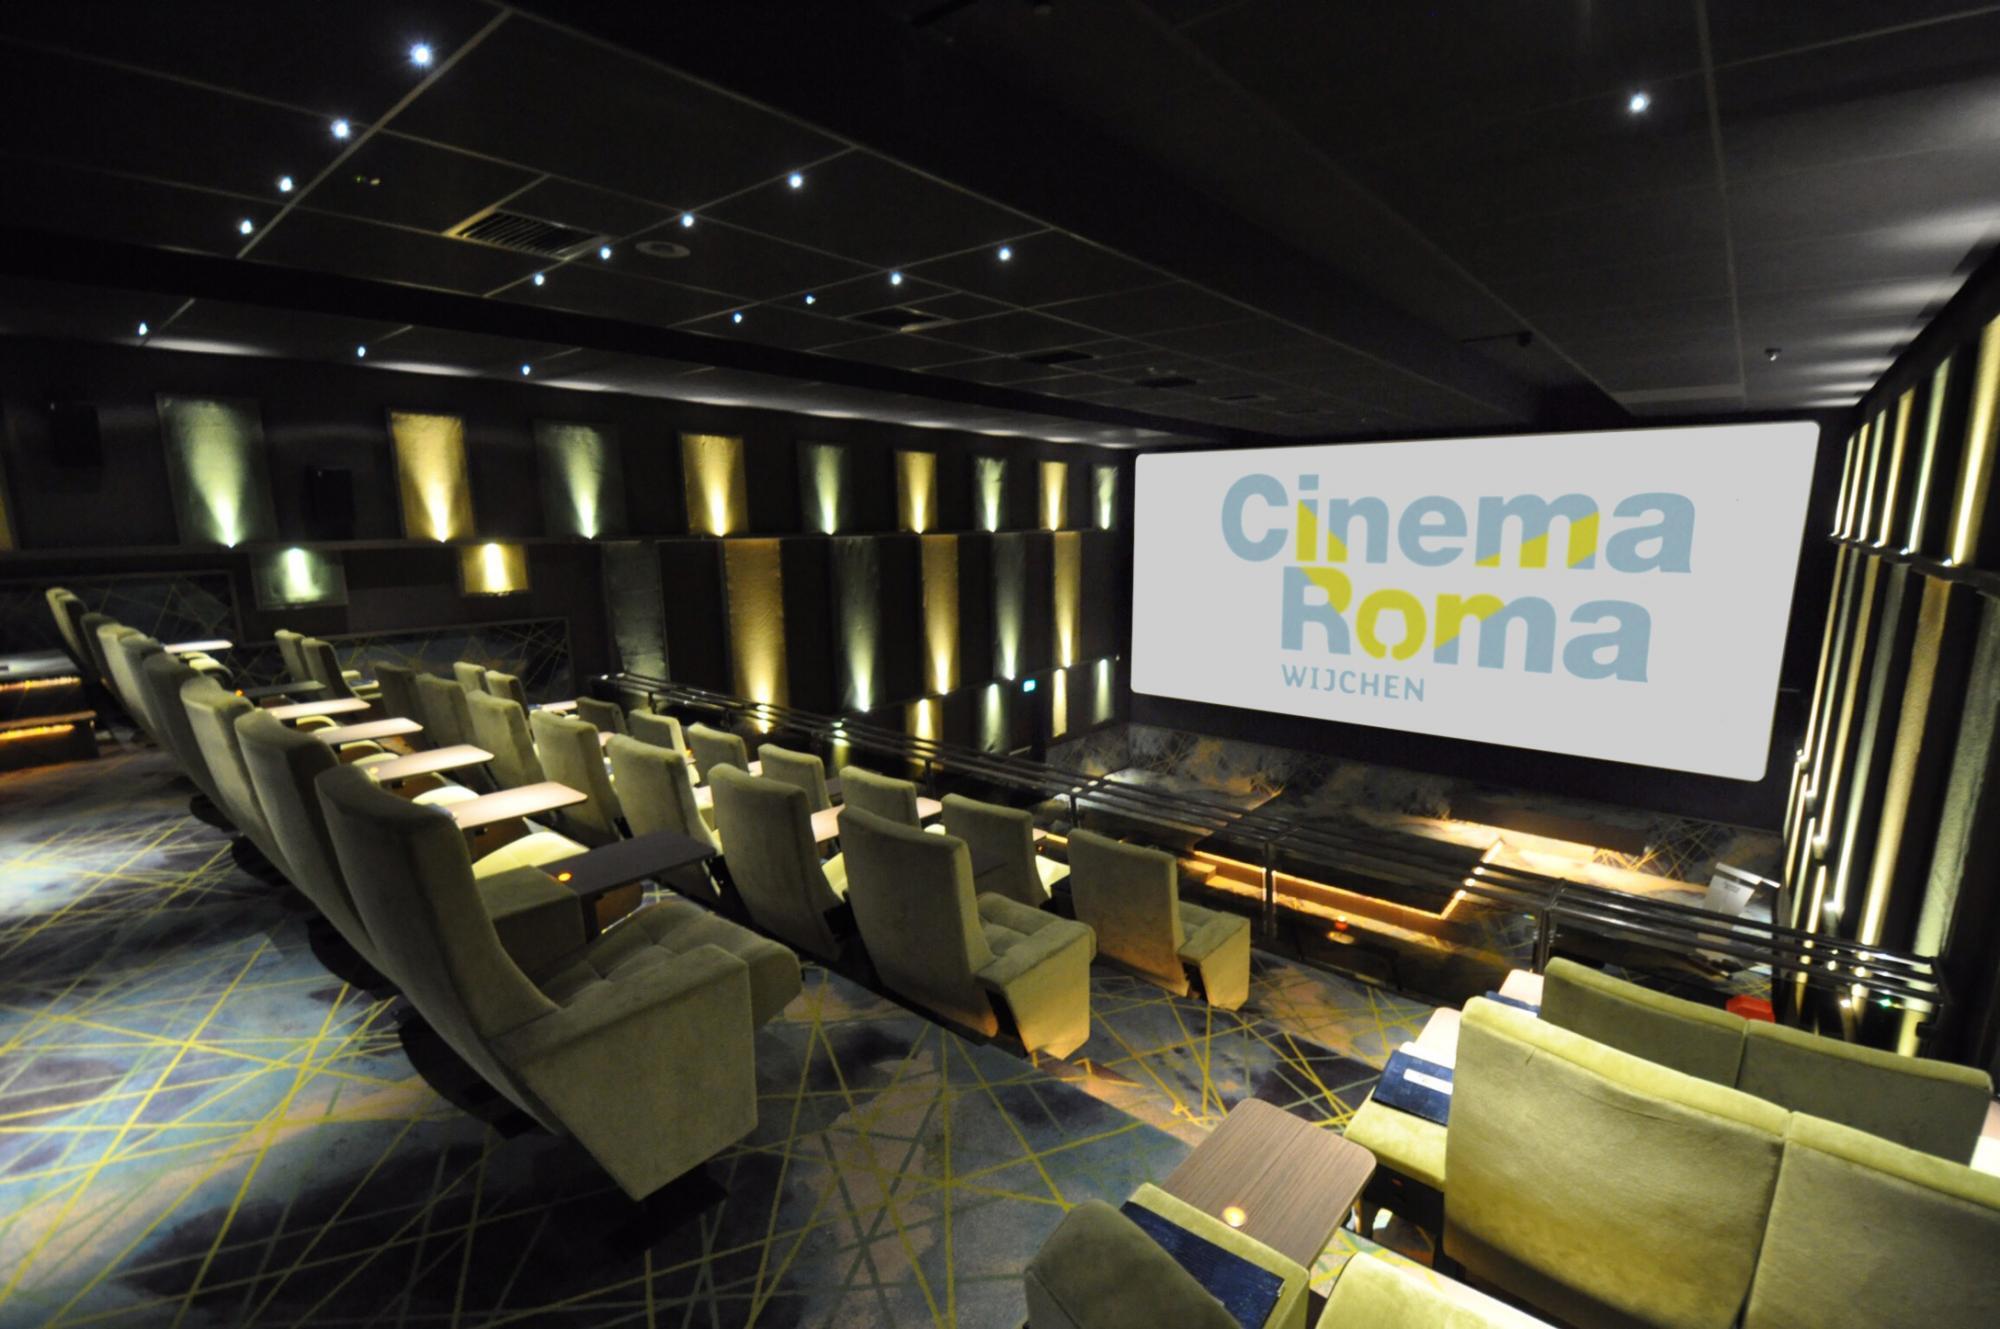 opera quays cinema session times forex